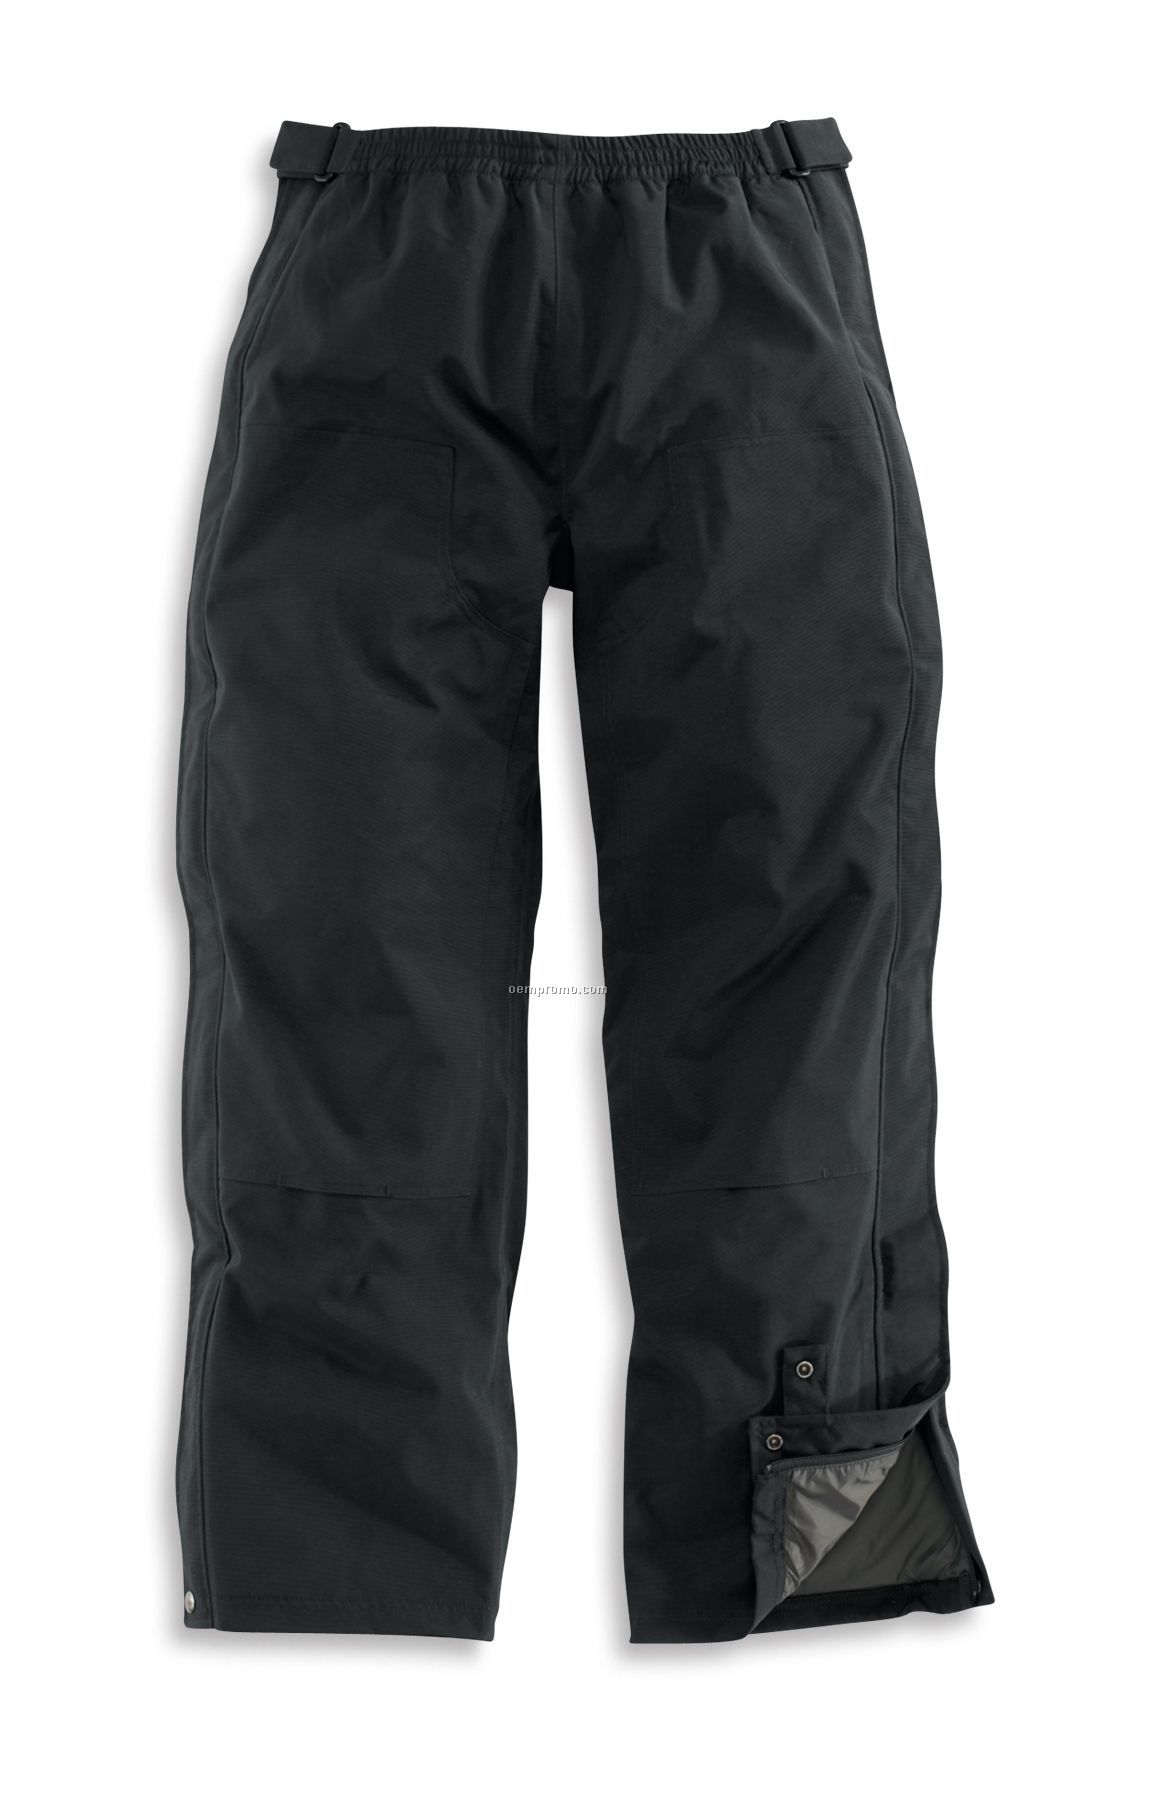 Carhartt Men's Waterproof Breathable Nylon Pant